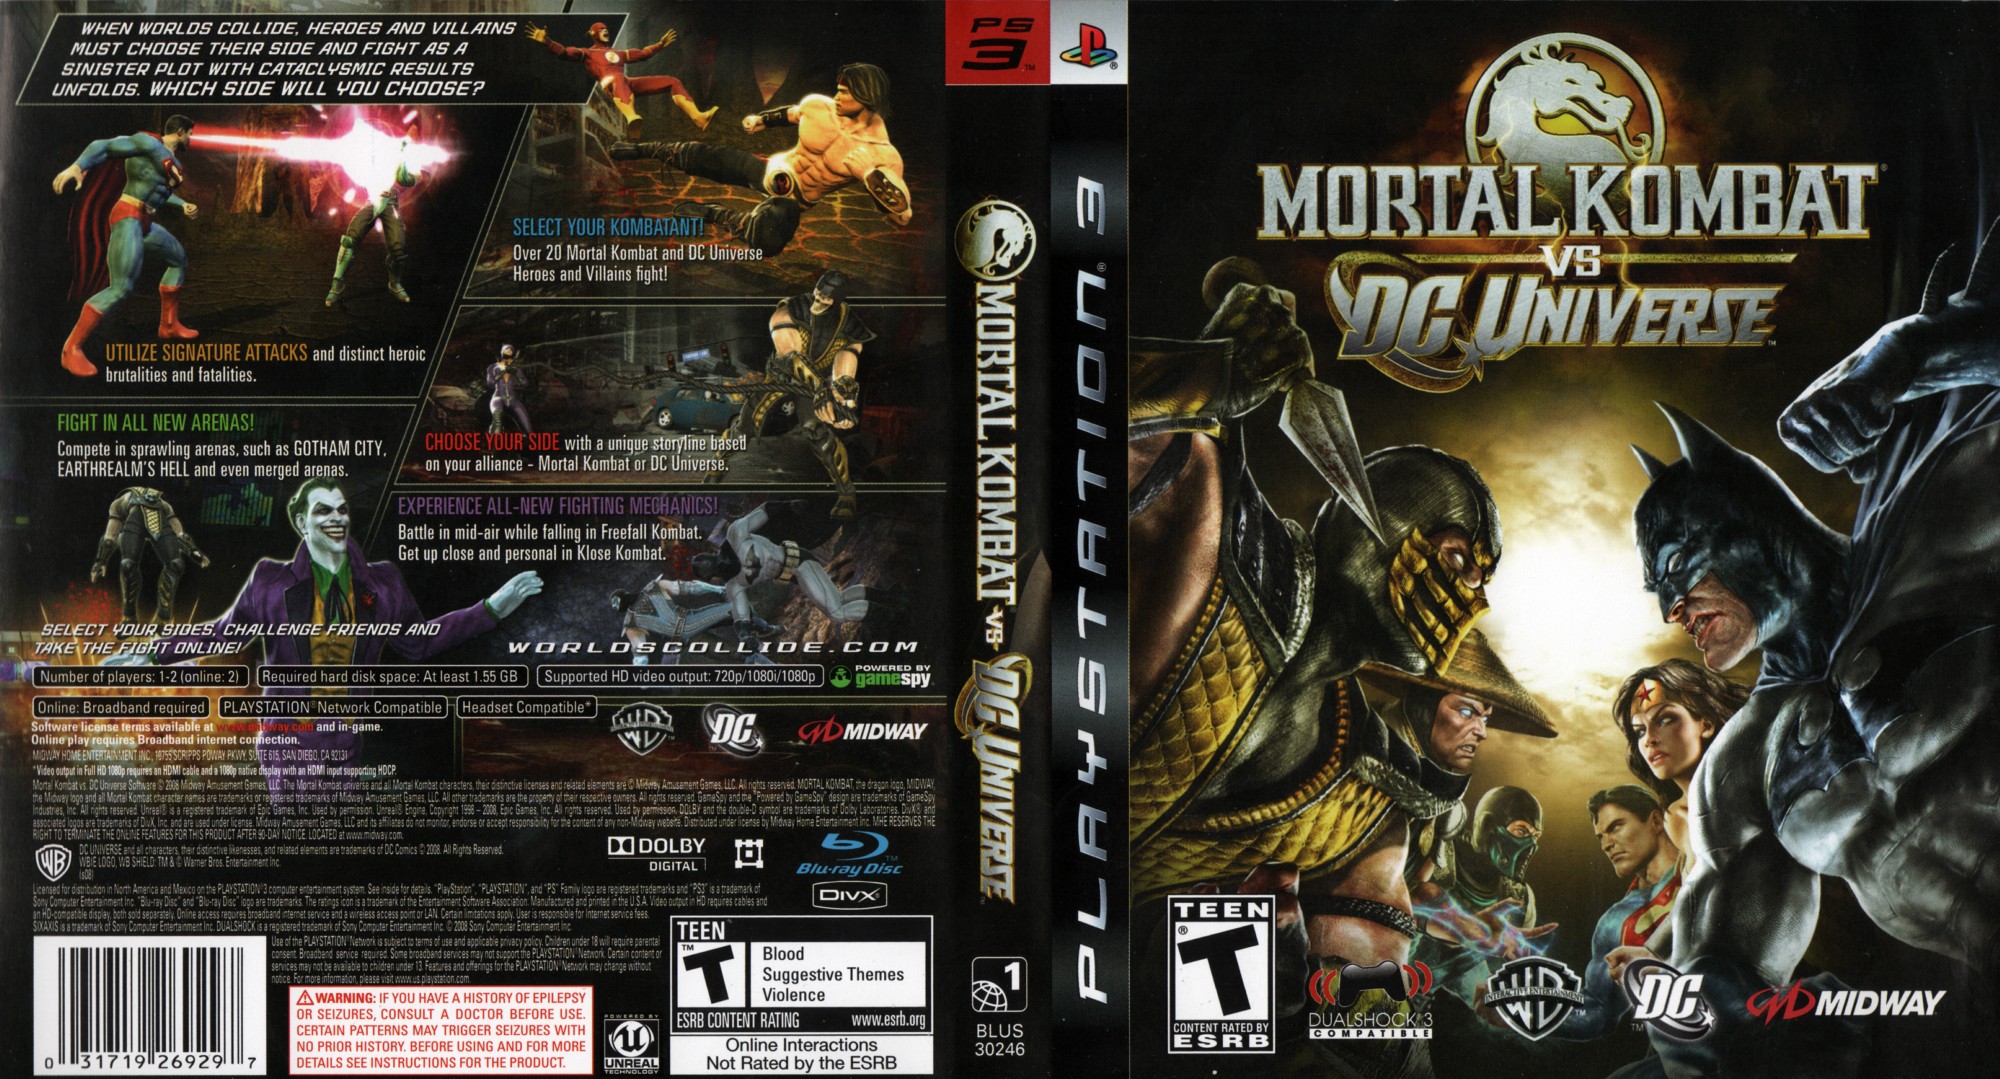 High Resolution Wallpaper | Mortal Kombat Vs. DC Universe 2000x1079 px